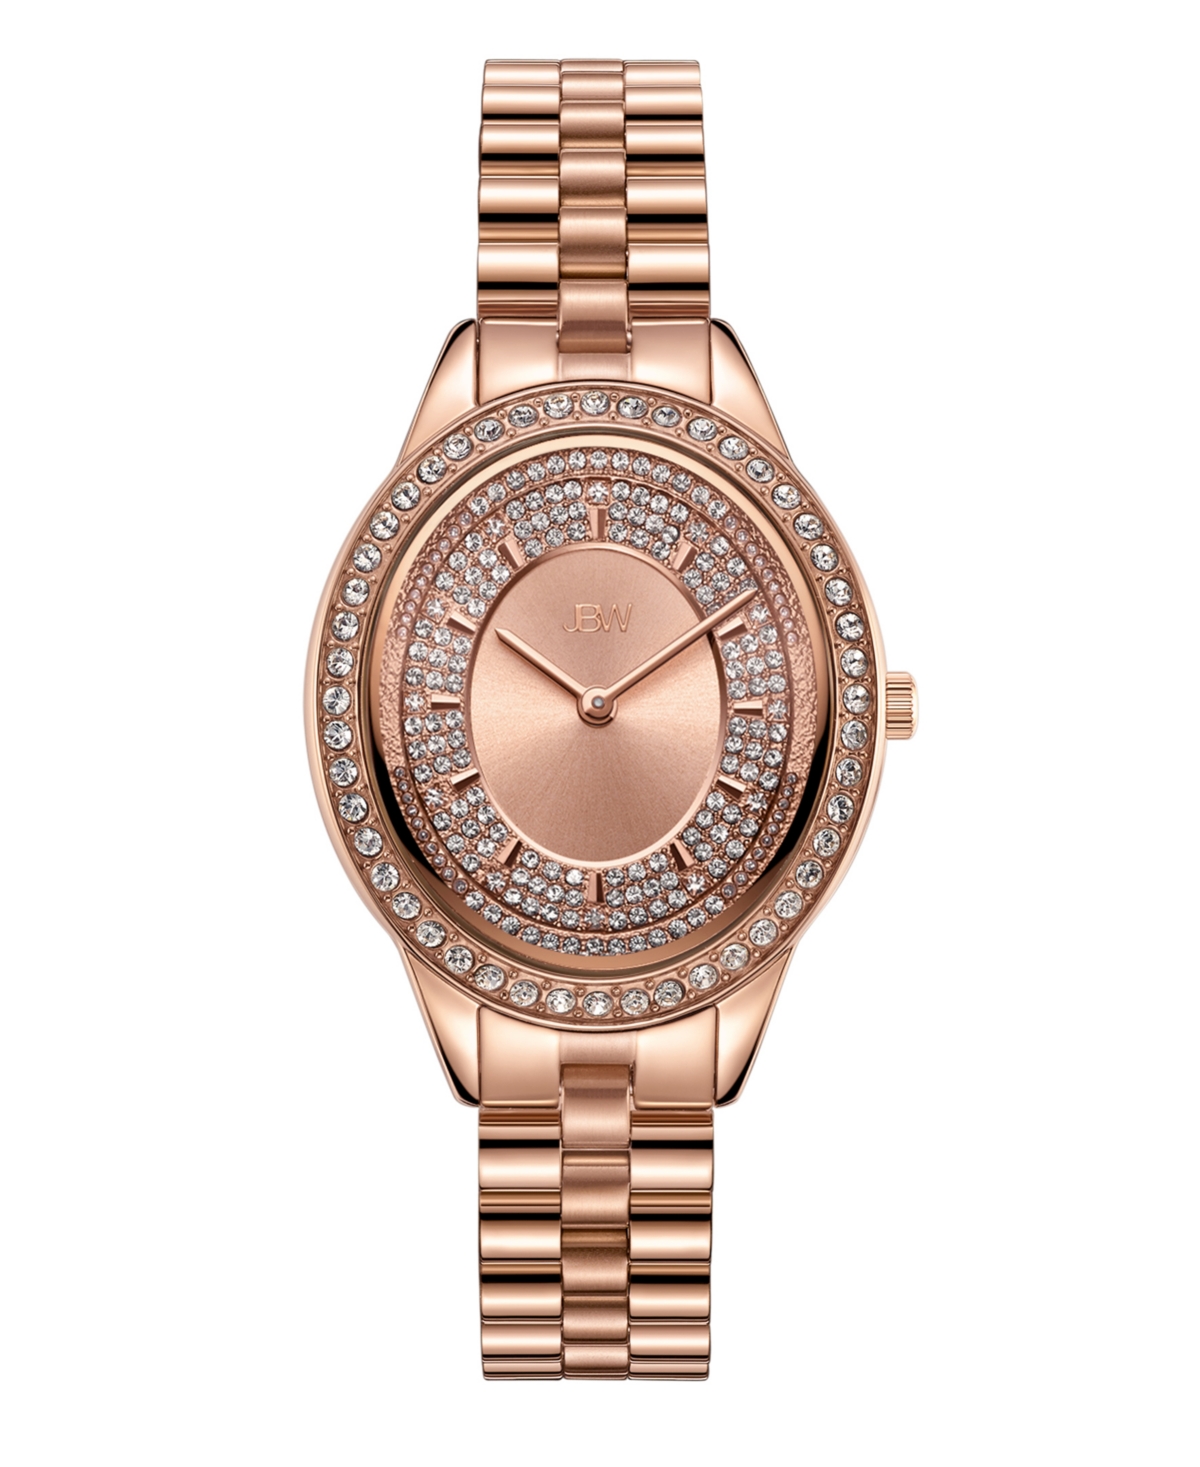 Women's Bellini Diamond (1/8 ct. t.w.) Watch in 18k Rose Gold-plated Stainless-steel Watch 30 Mm - Gold